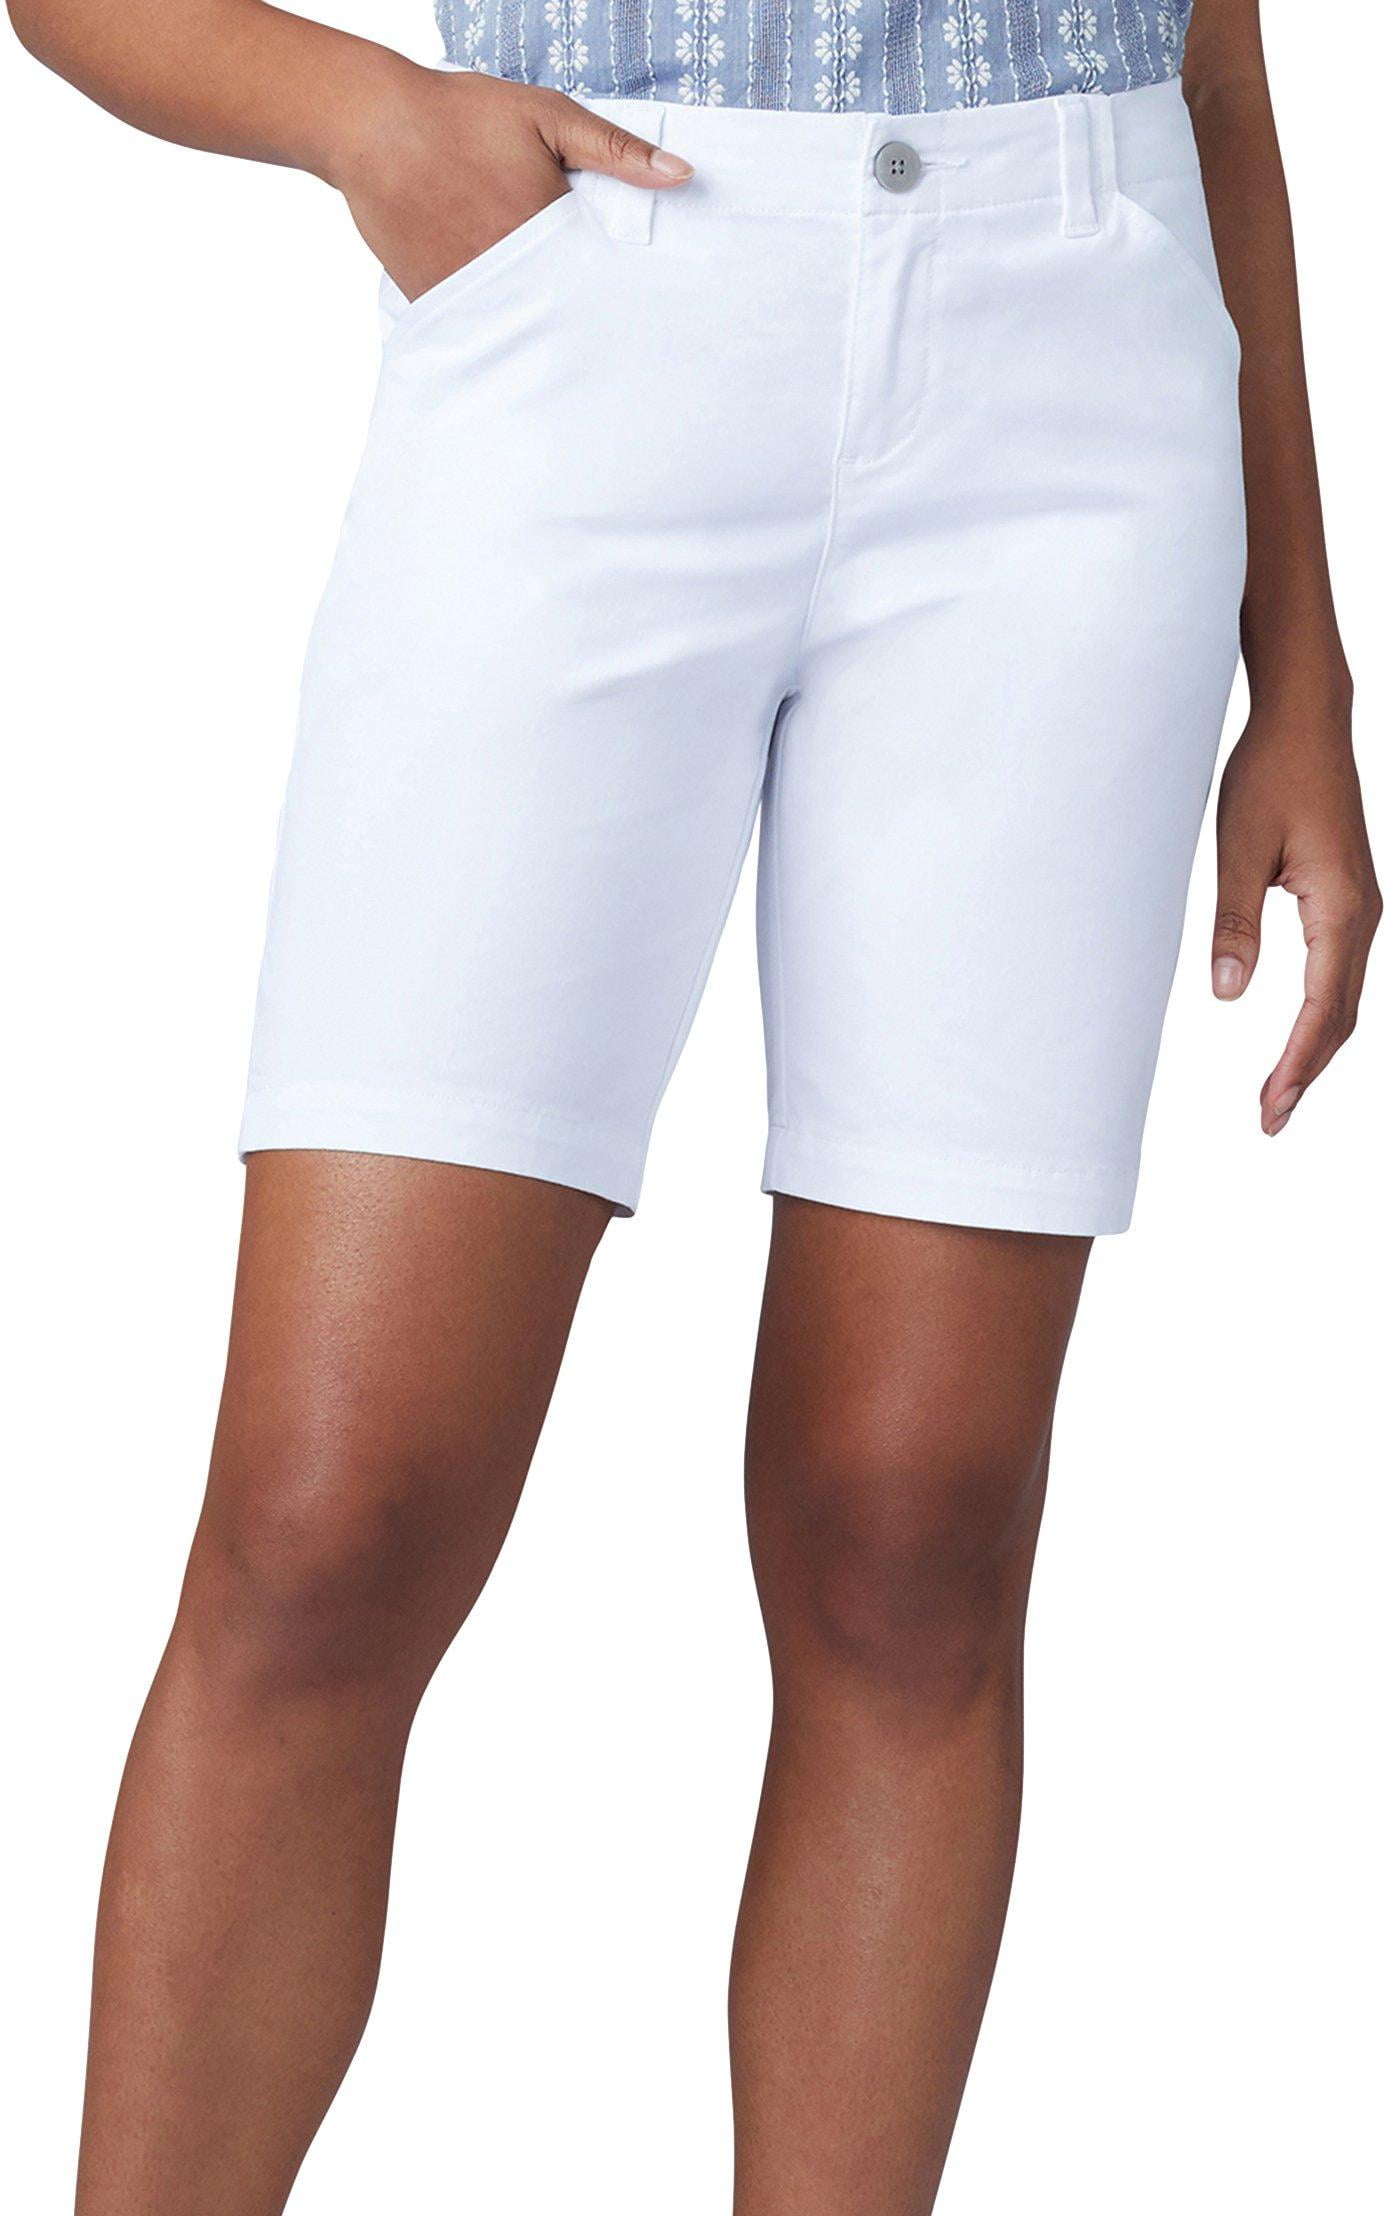 Lee Women's Petite Size Regular Fit Chino Bermuda Shorts - White, White, 8  Petite - Walmart.com